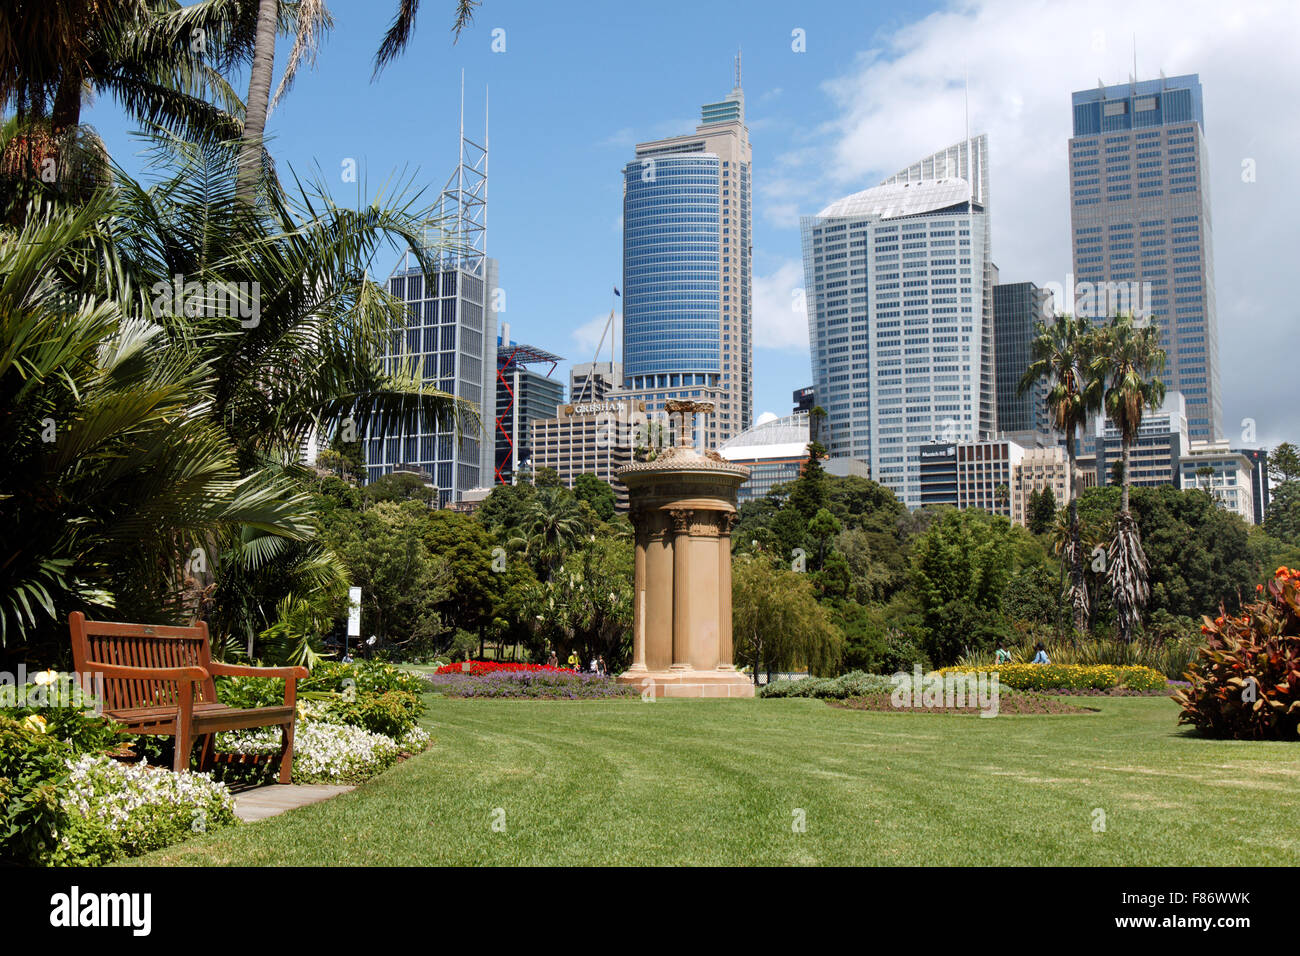 Royal Botanic Gardens I Sydney I Australia Stock Photo